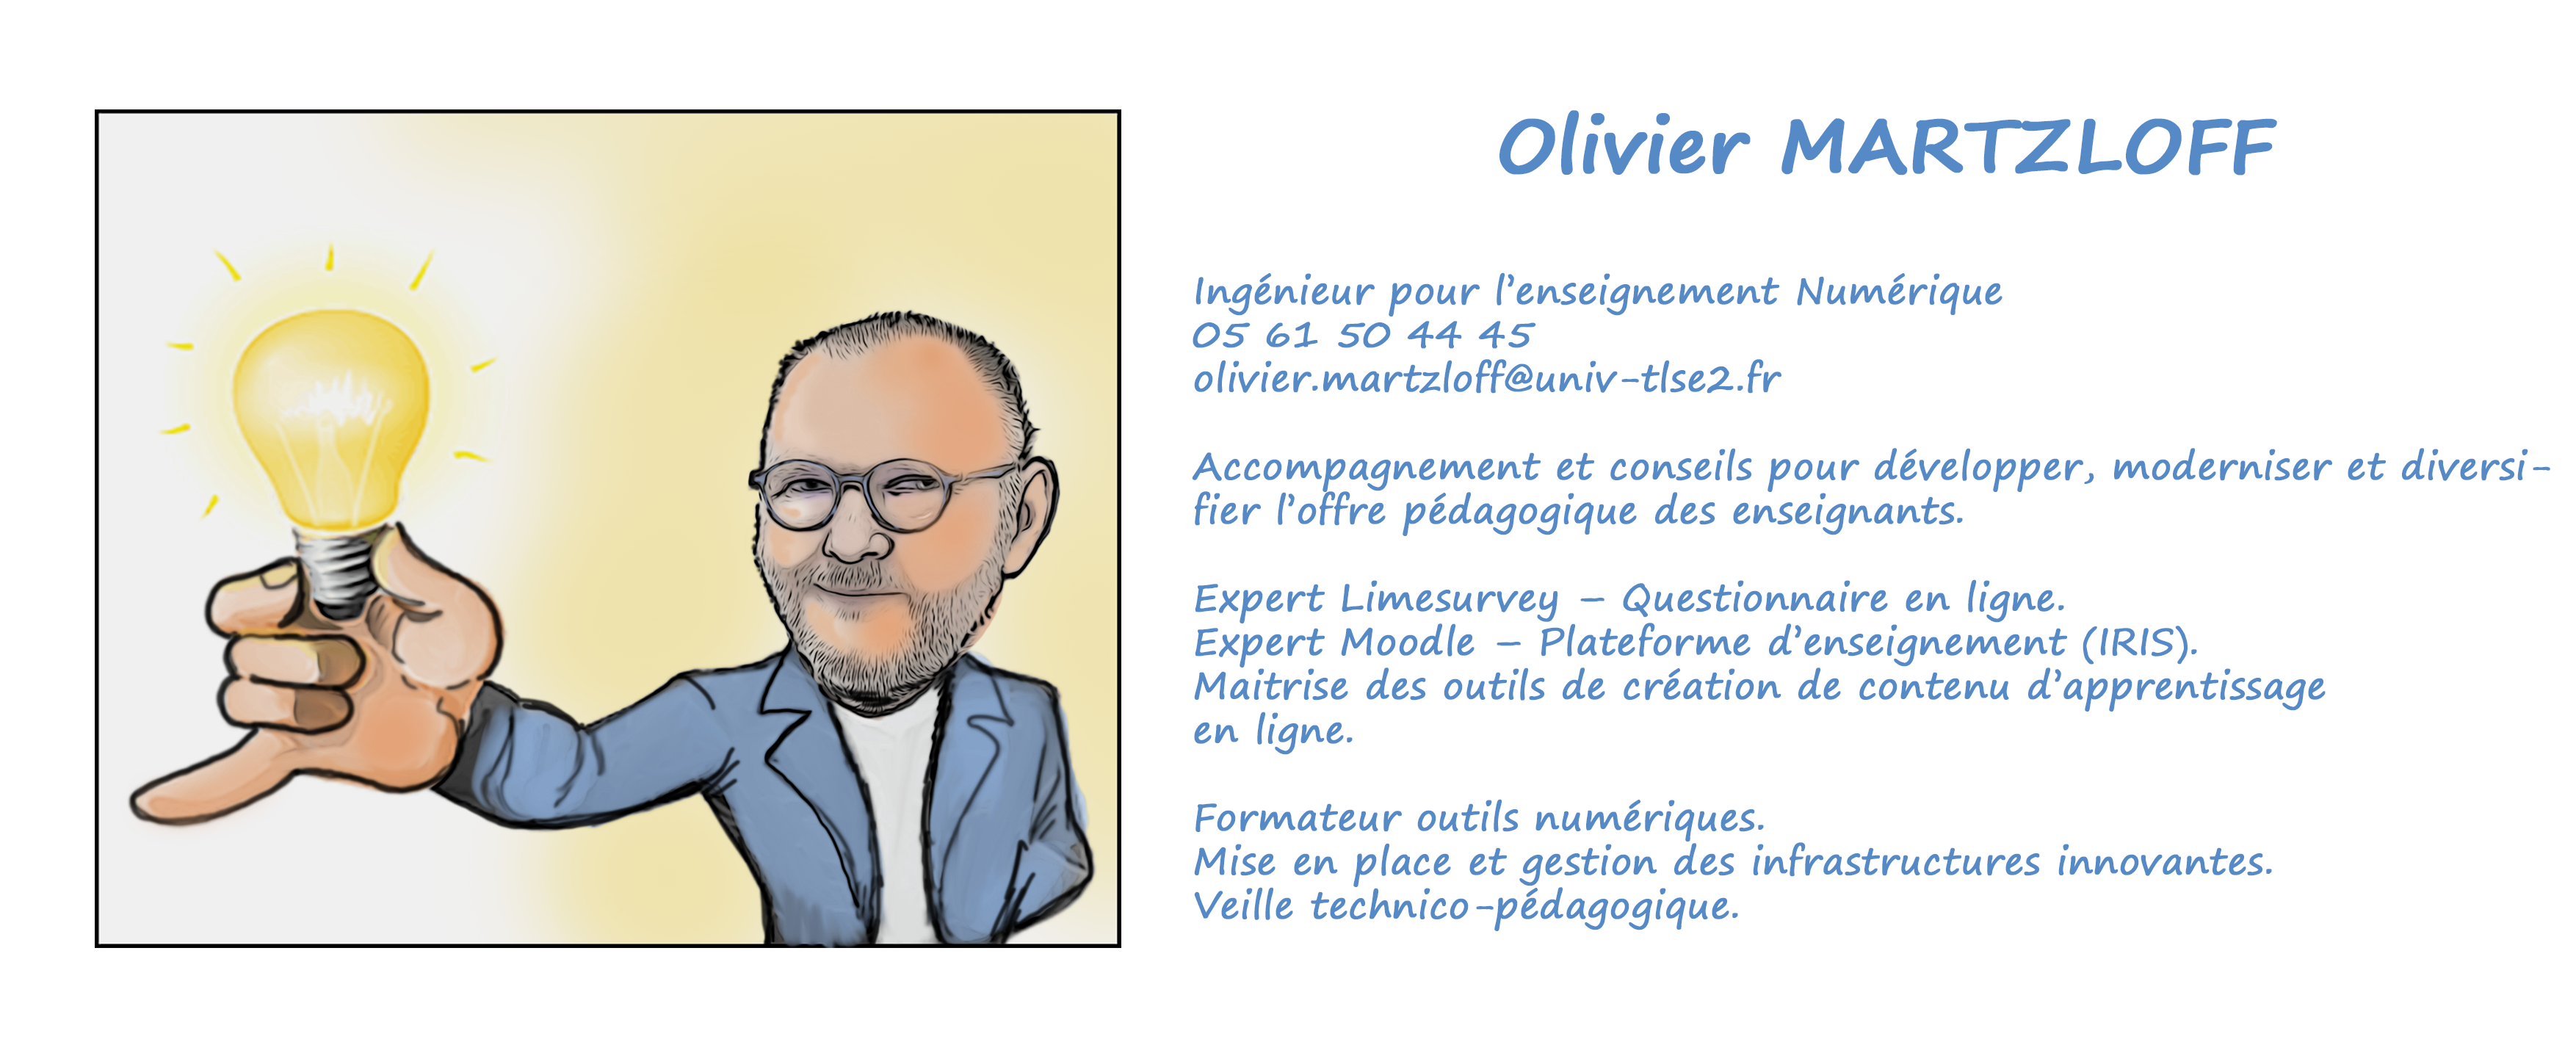 Trombinoscope : Olivier Martzloff